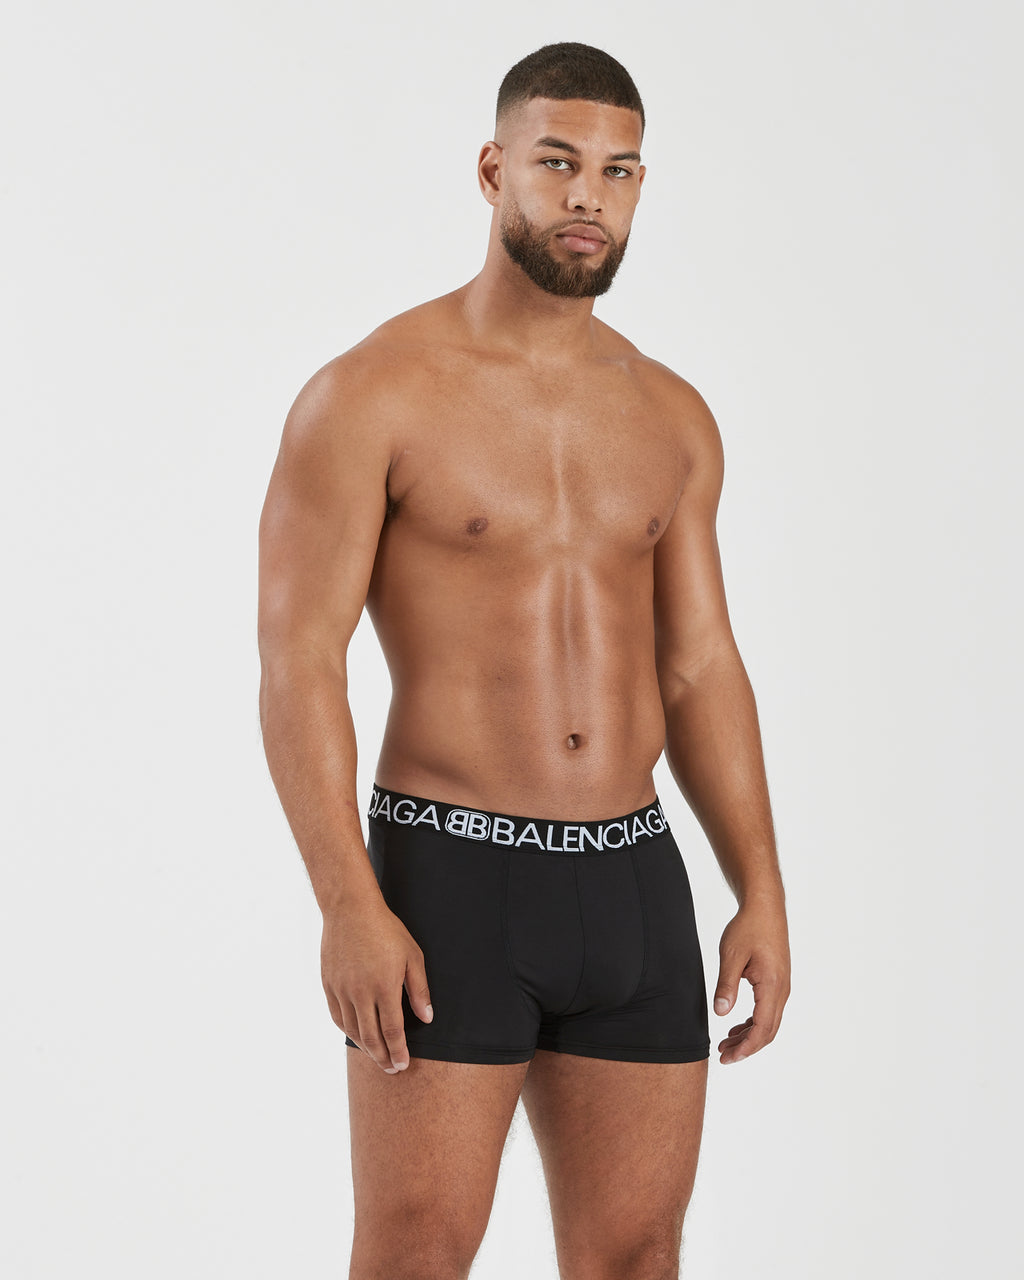 Balenciaga Three-pack Boxers in Black for Men